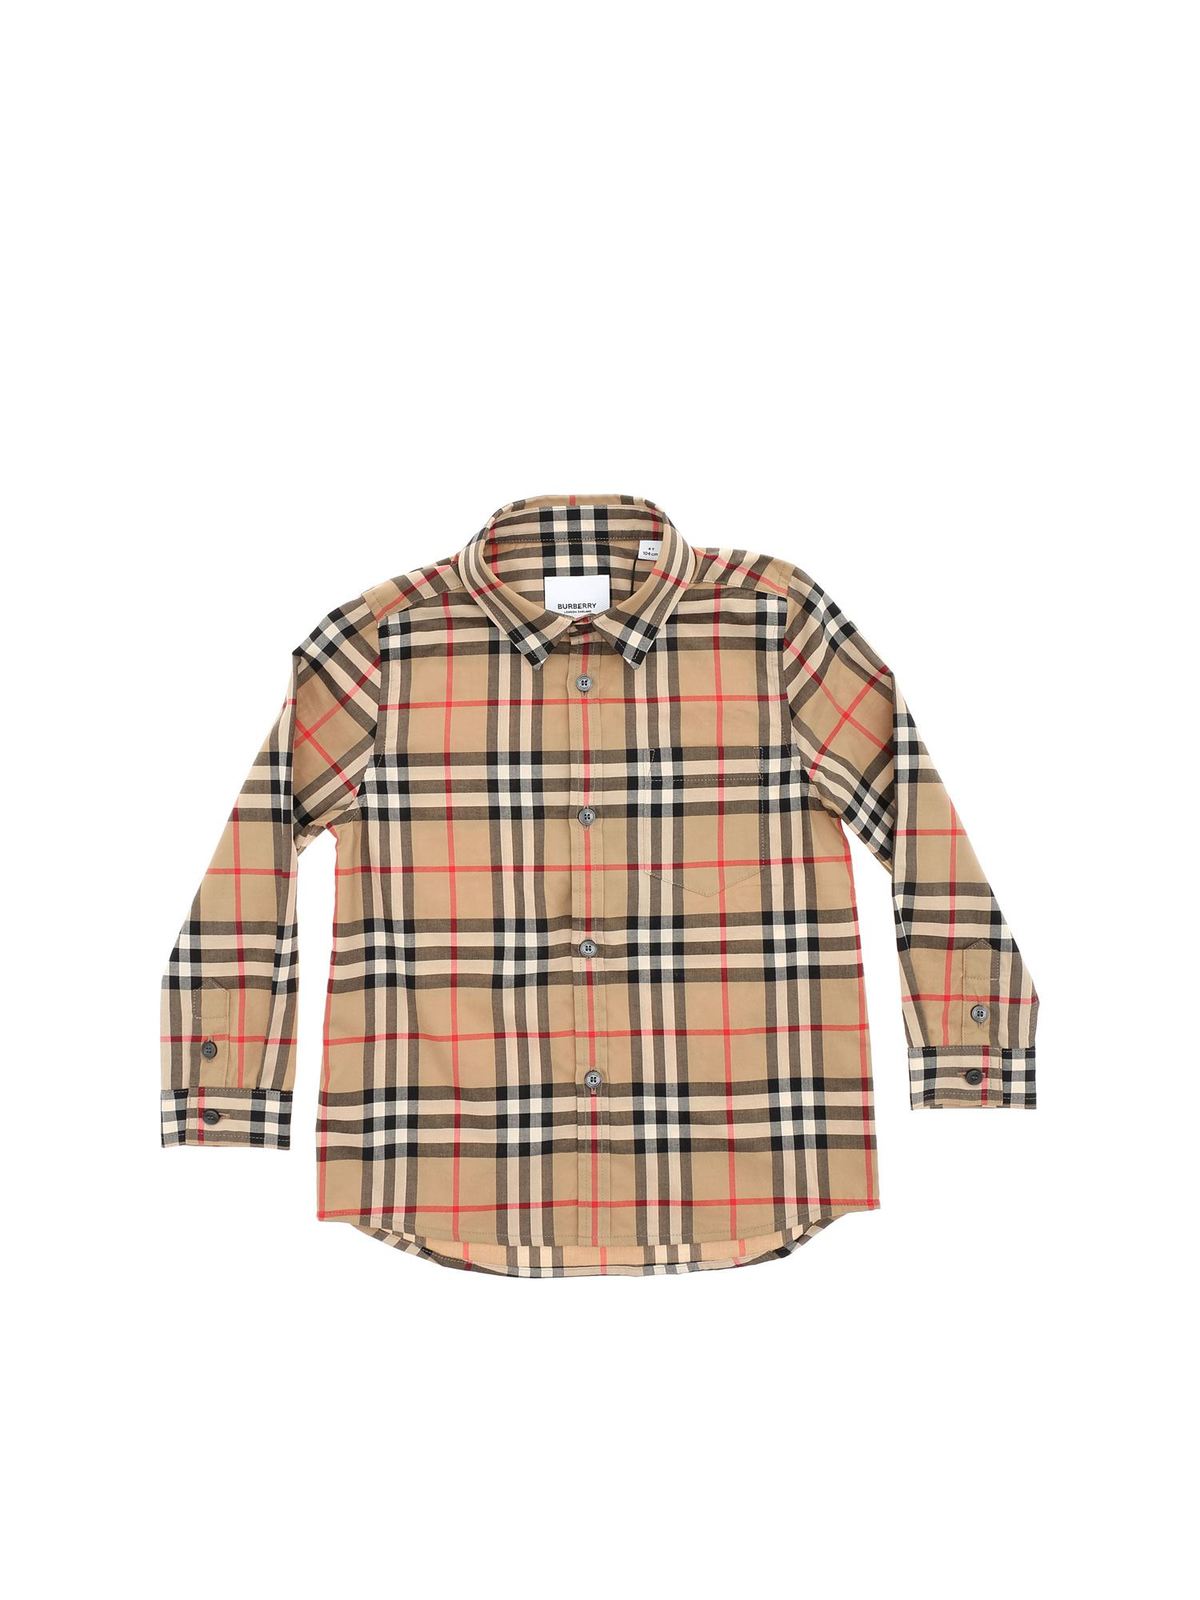 Burberry - Fredrick Check shirt 